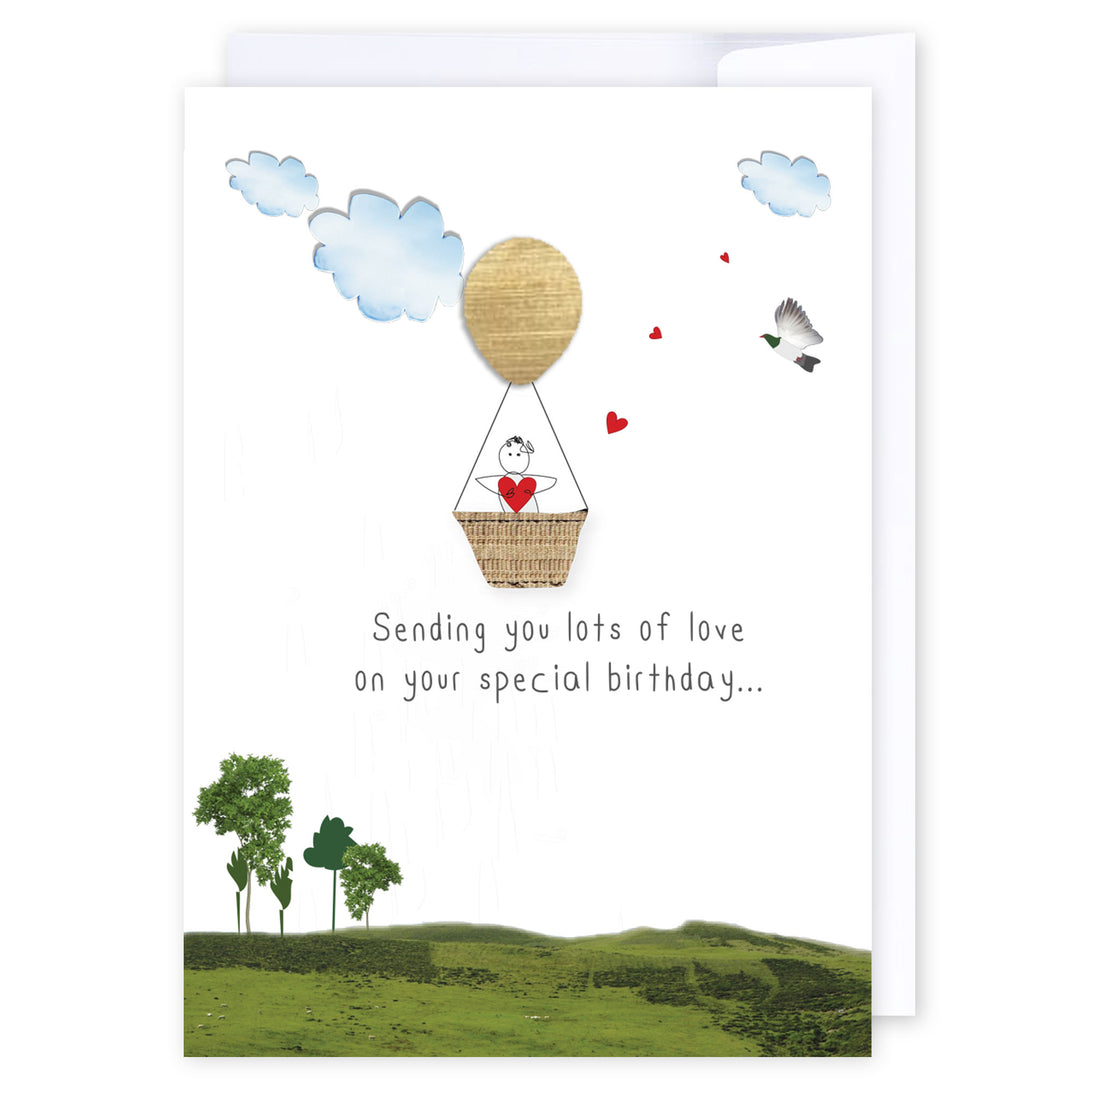 Special birthday hot air balloon